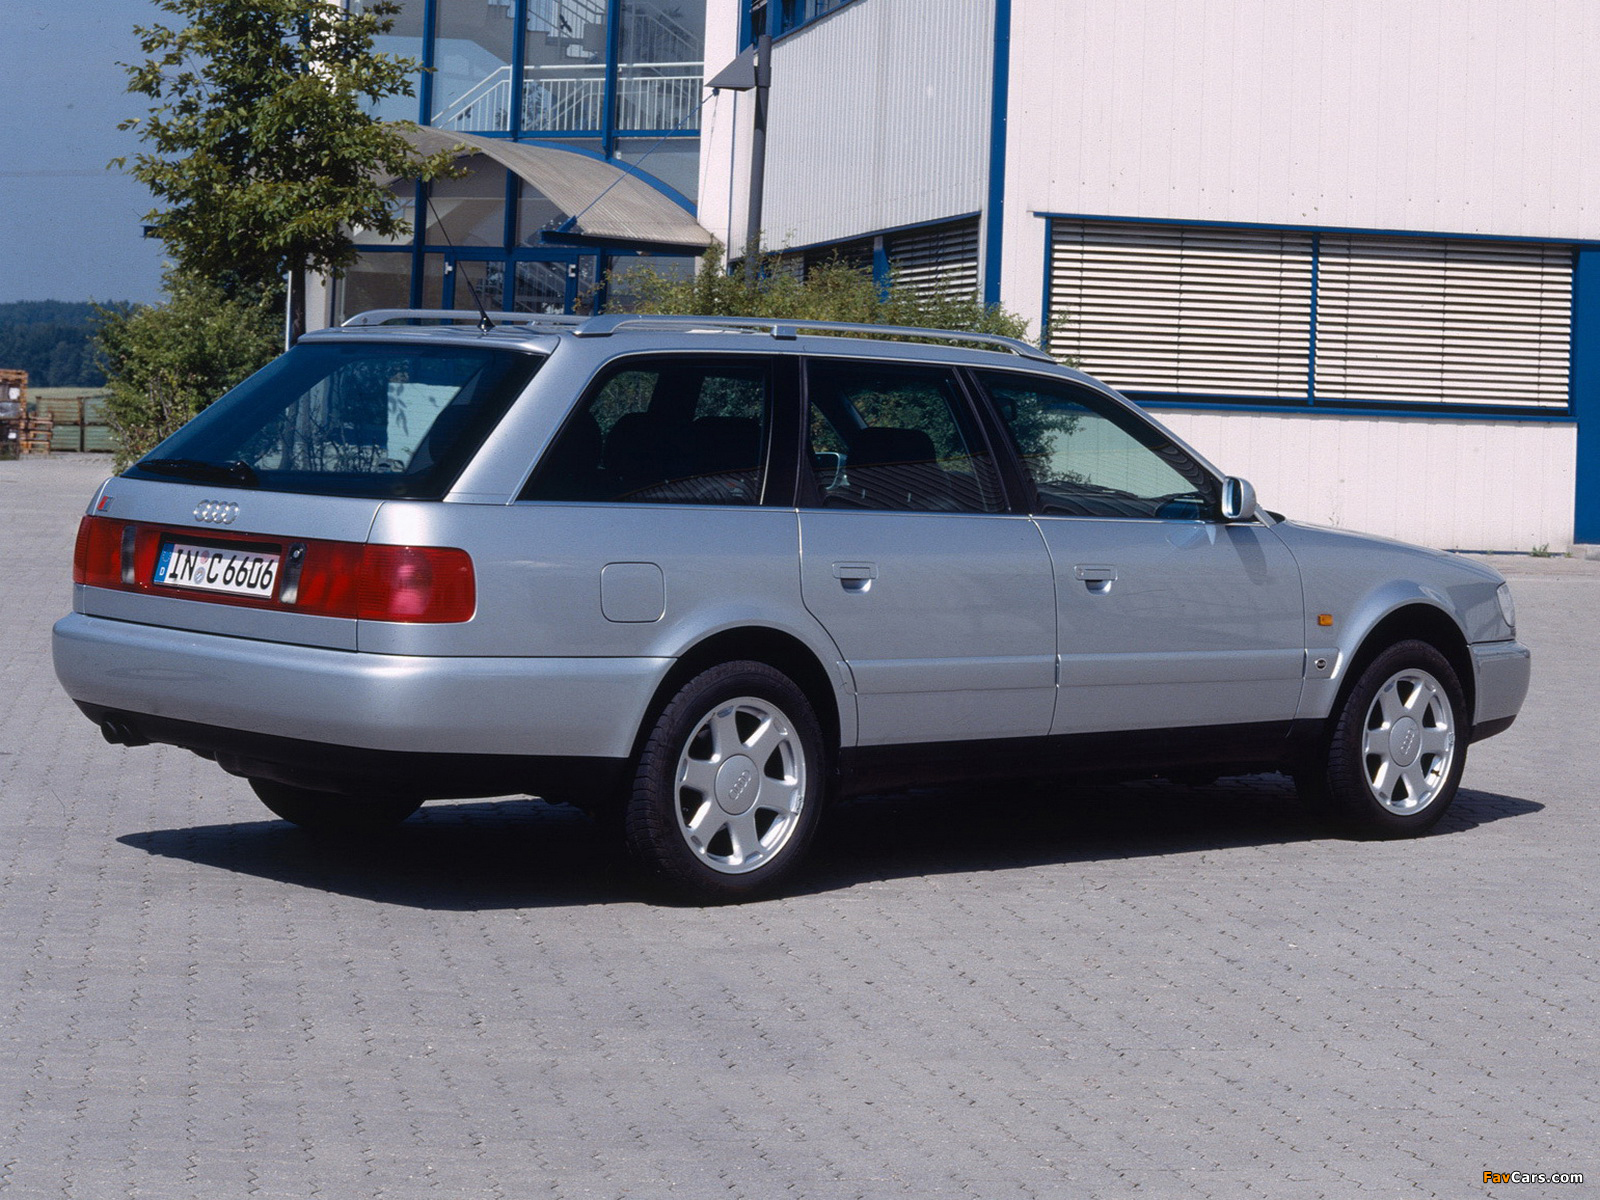 Продажа ауди универсал. Audi a6 универсал 1997. Ауди а6 с4 универсал. Ауди 100 s6 универсал. Ауди а6 1994 универсал.